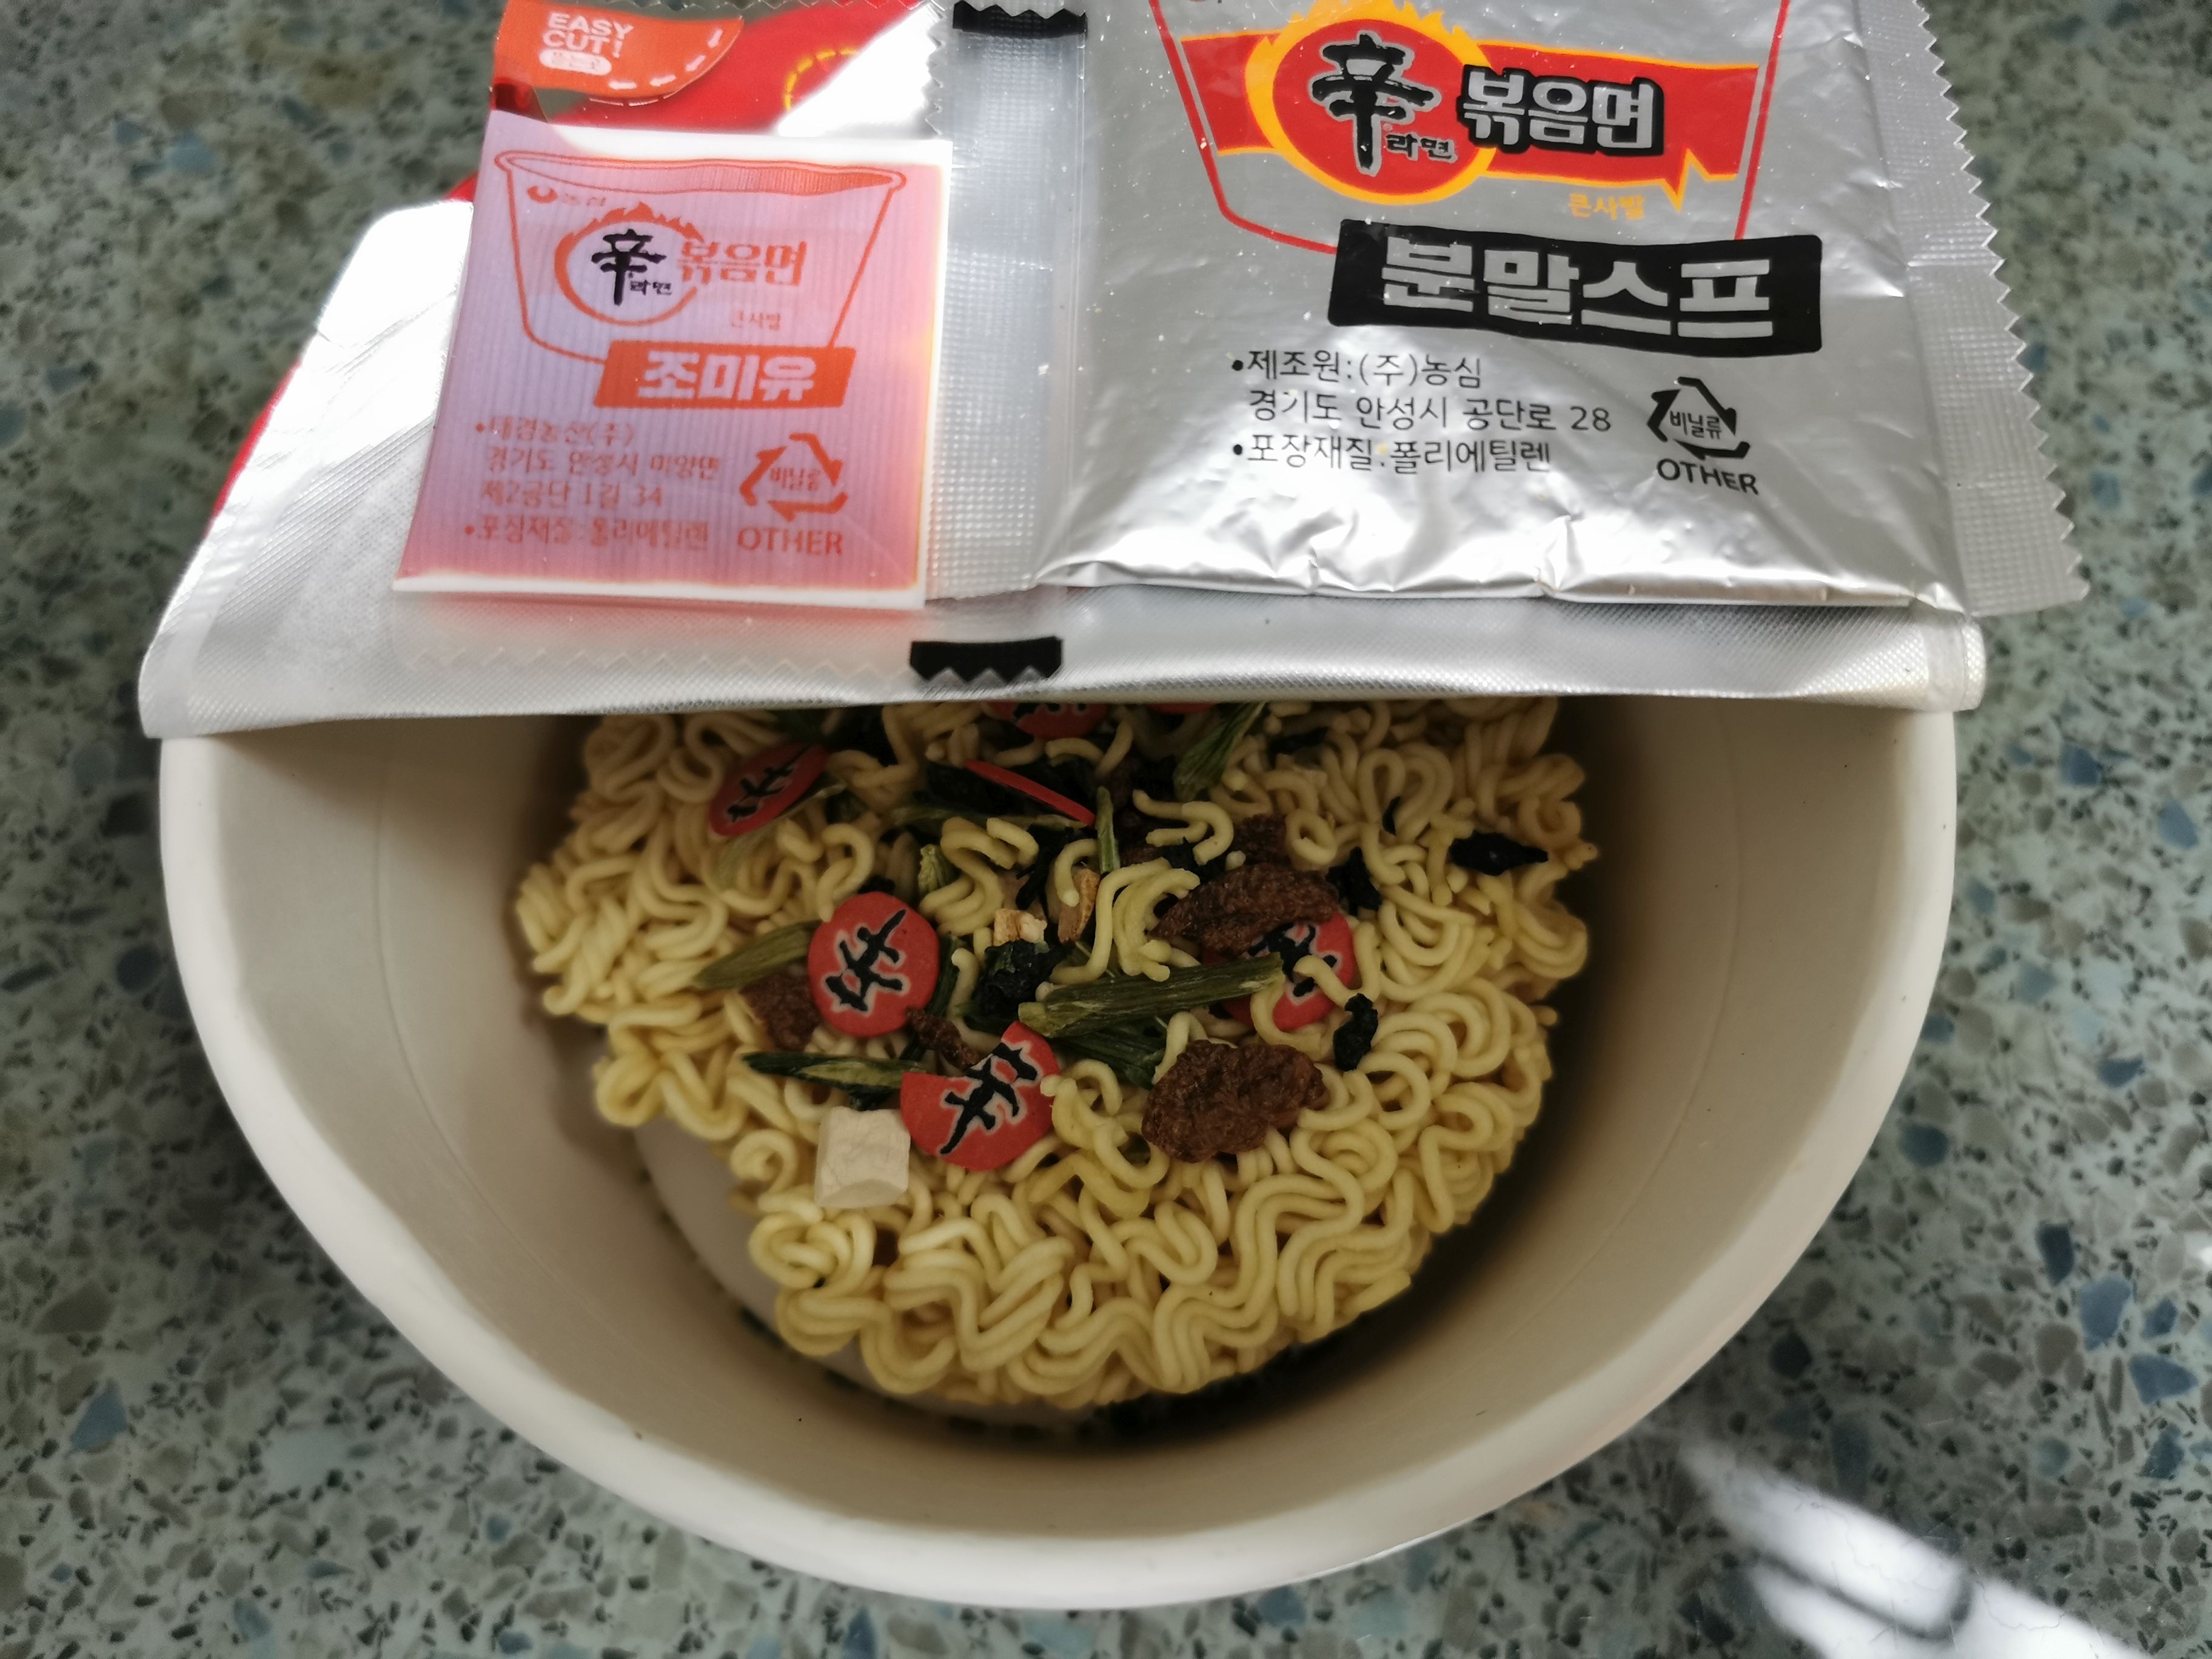 #2282: Nongshim "Shin Ramyun (Spicy) Stir Fried Noodles" Bowl